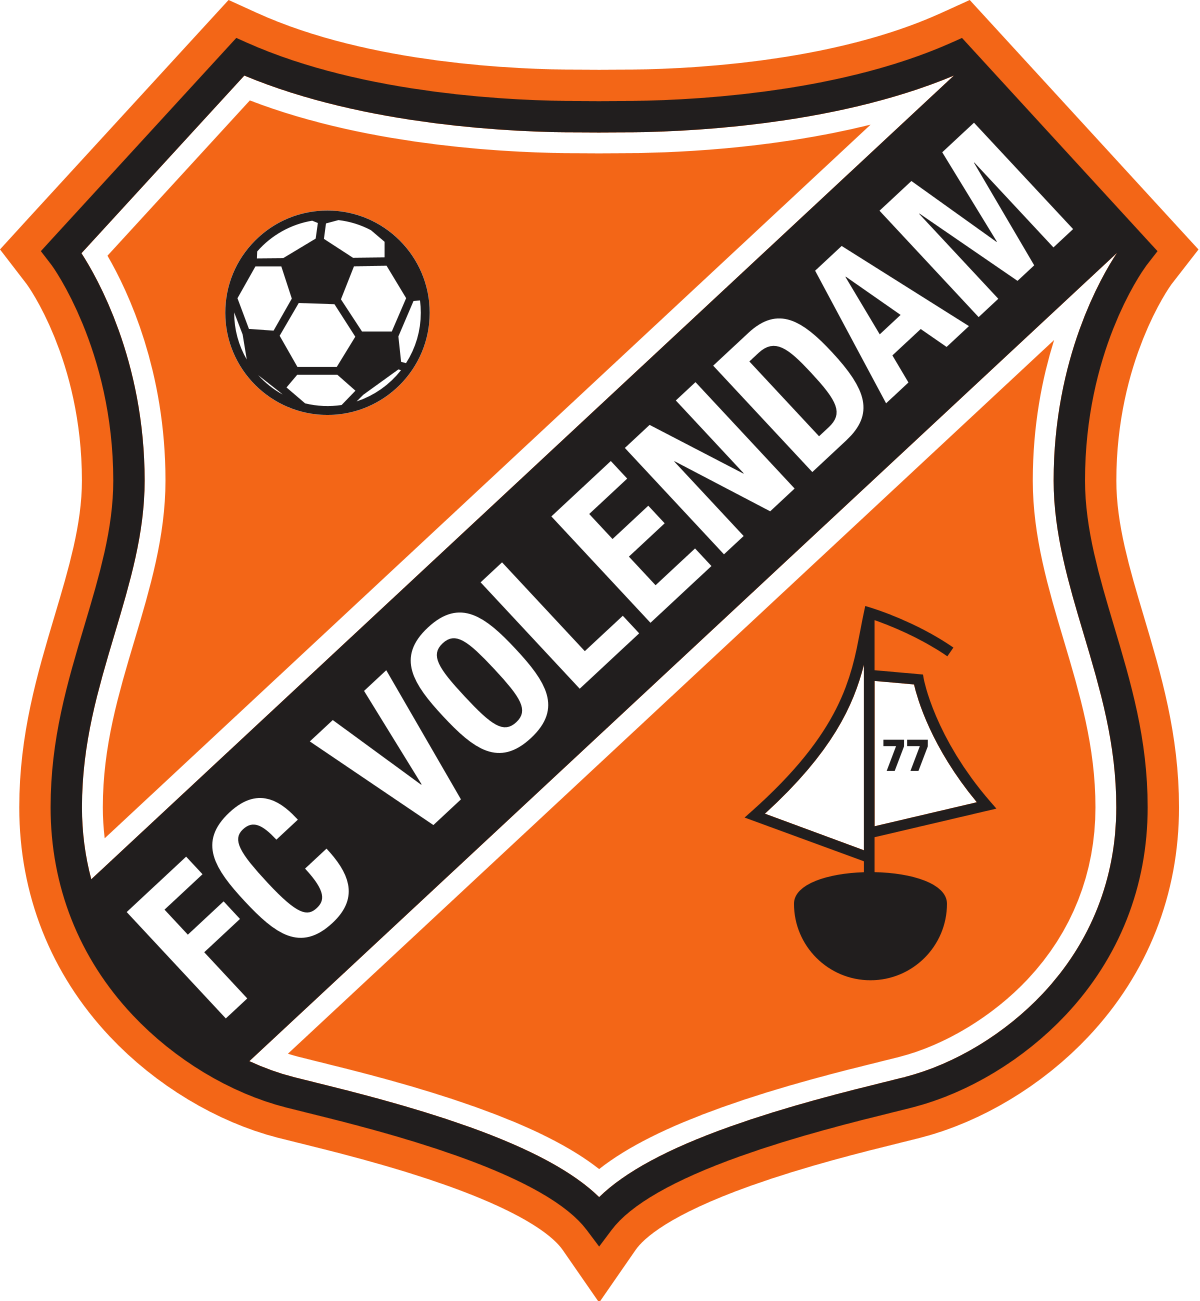 Volendam U-21 logo